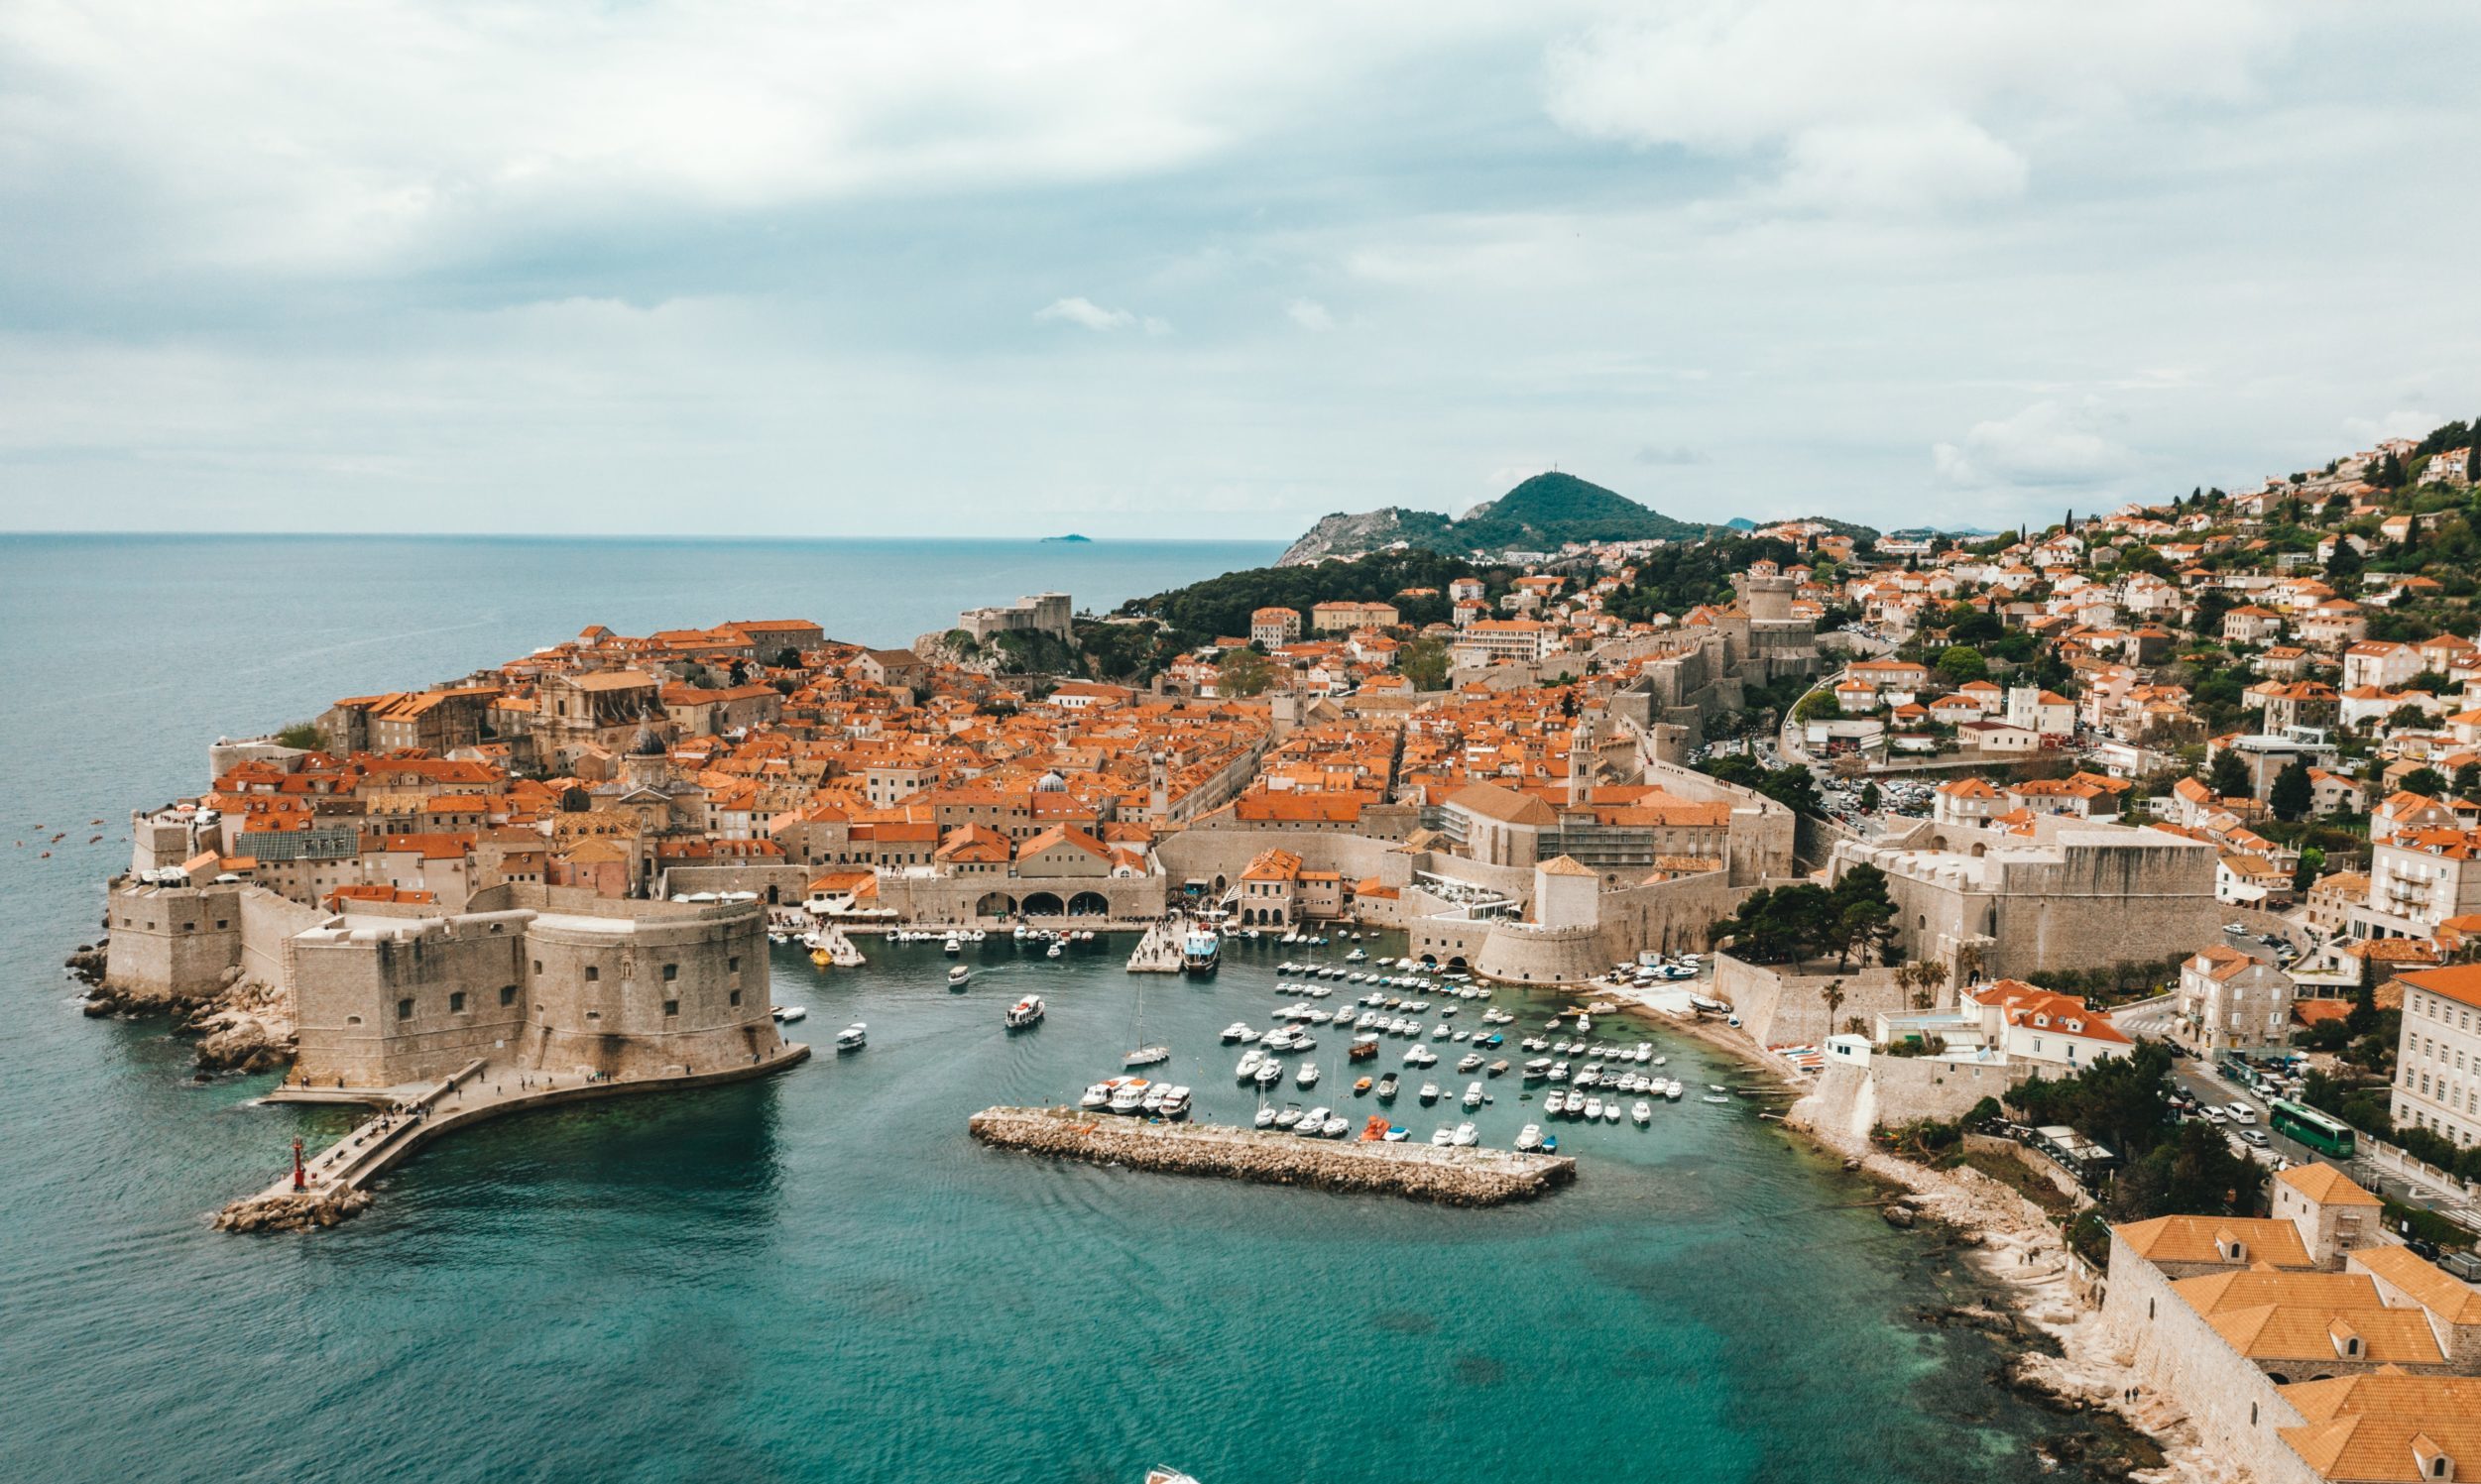 <p>DIGIDAY PUBLISHING SUMMIT EUROPE<br />Dubrovnik, Croatia</p>
